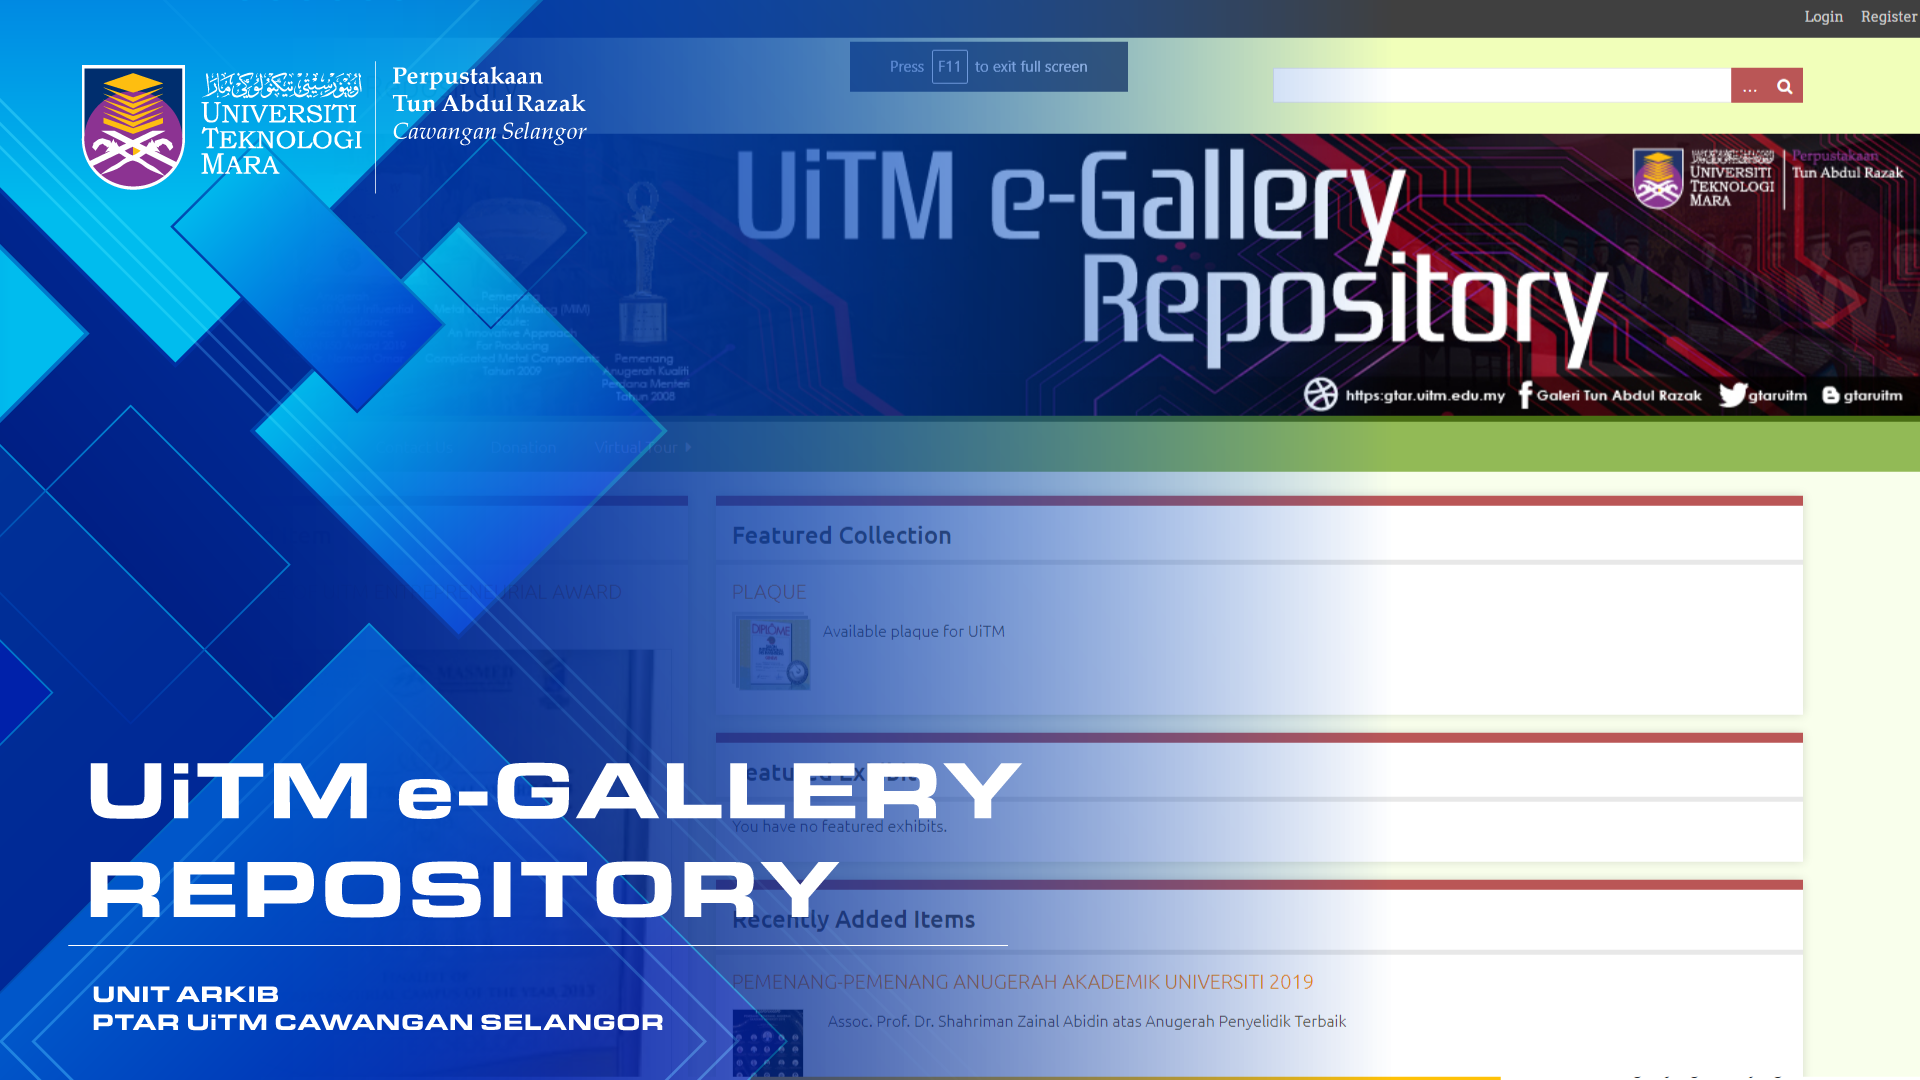 UiTM e-GALLERY REPOSITORY